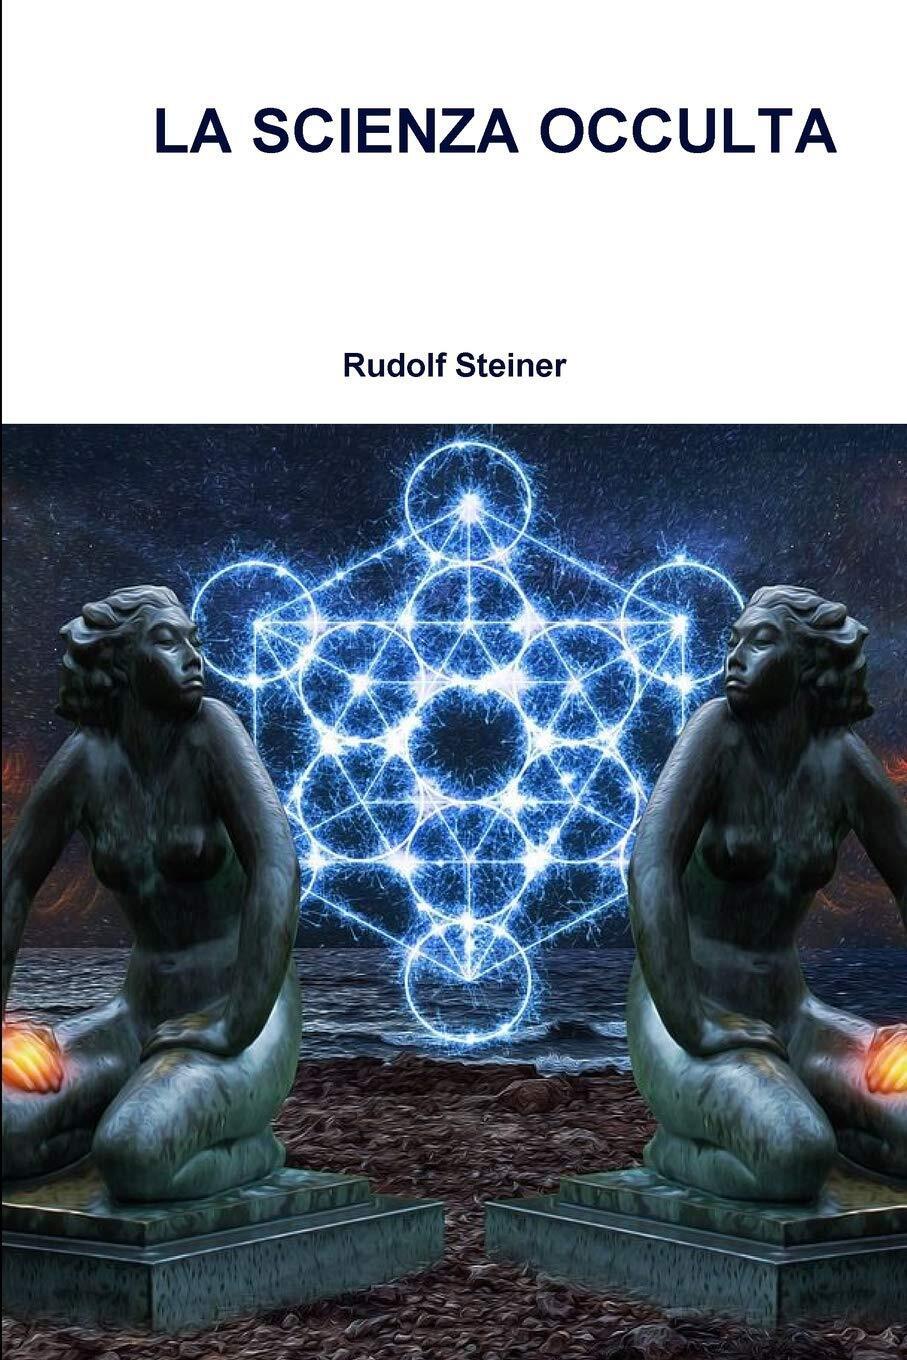 LA SCIENZA OCCULTA - Rudolf Steiner - Lulu.com, 2018